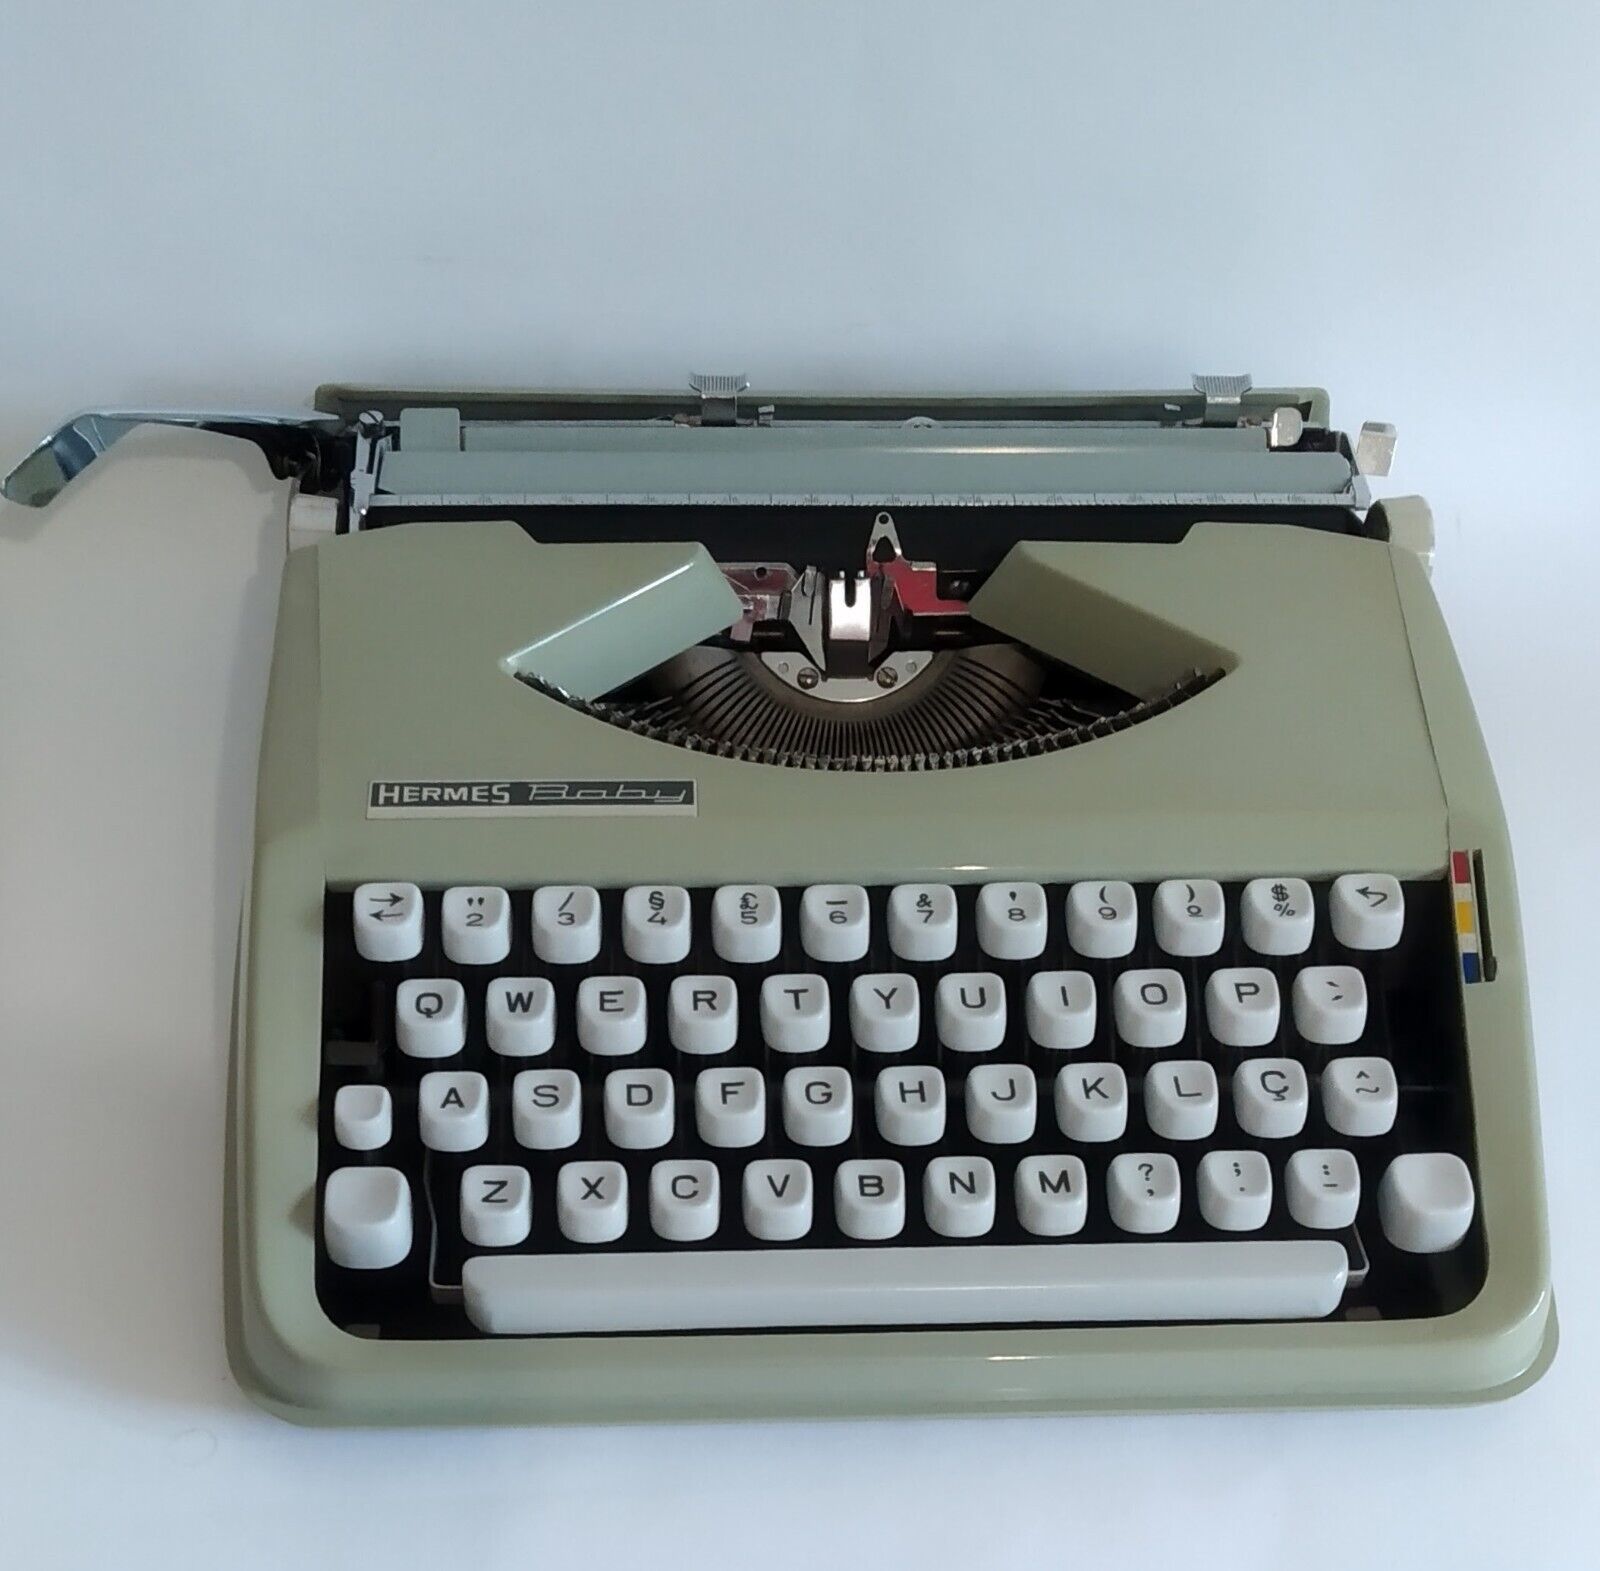 Hermes Baby Typewriter - Cursive / Script